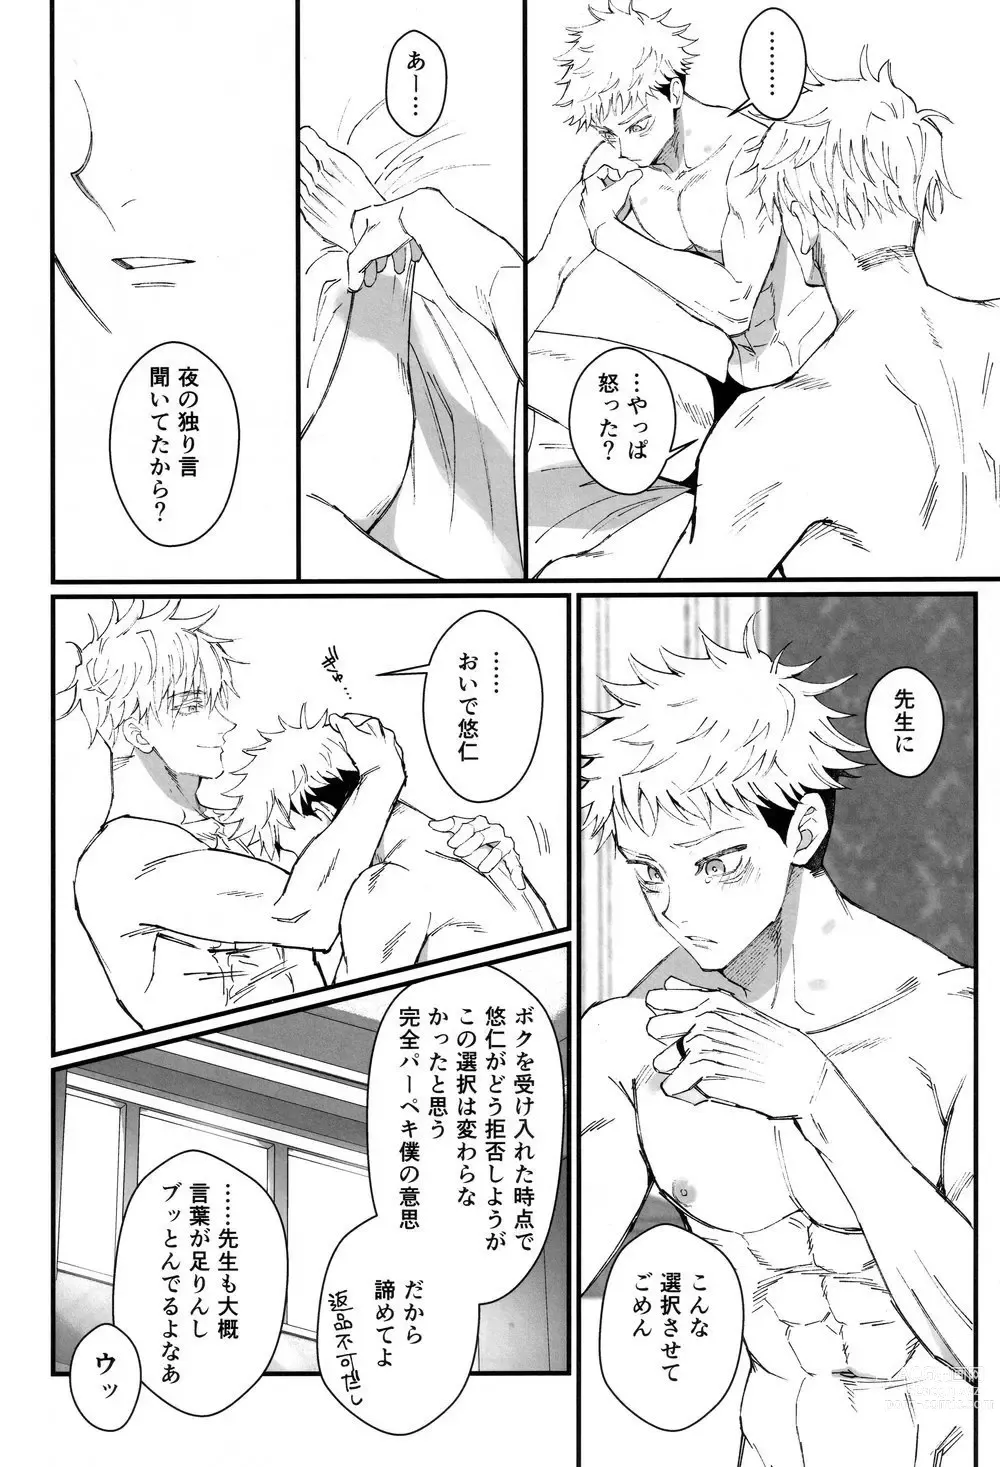 Page 31 of doujinshi Zoku Gachikoi Monster